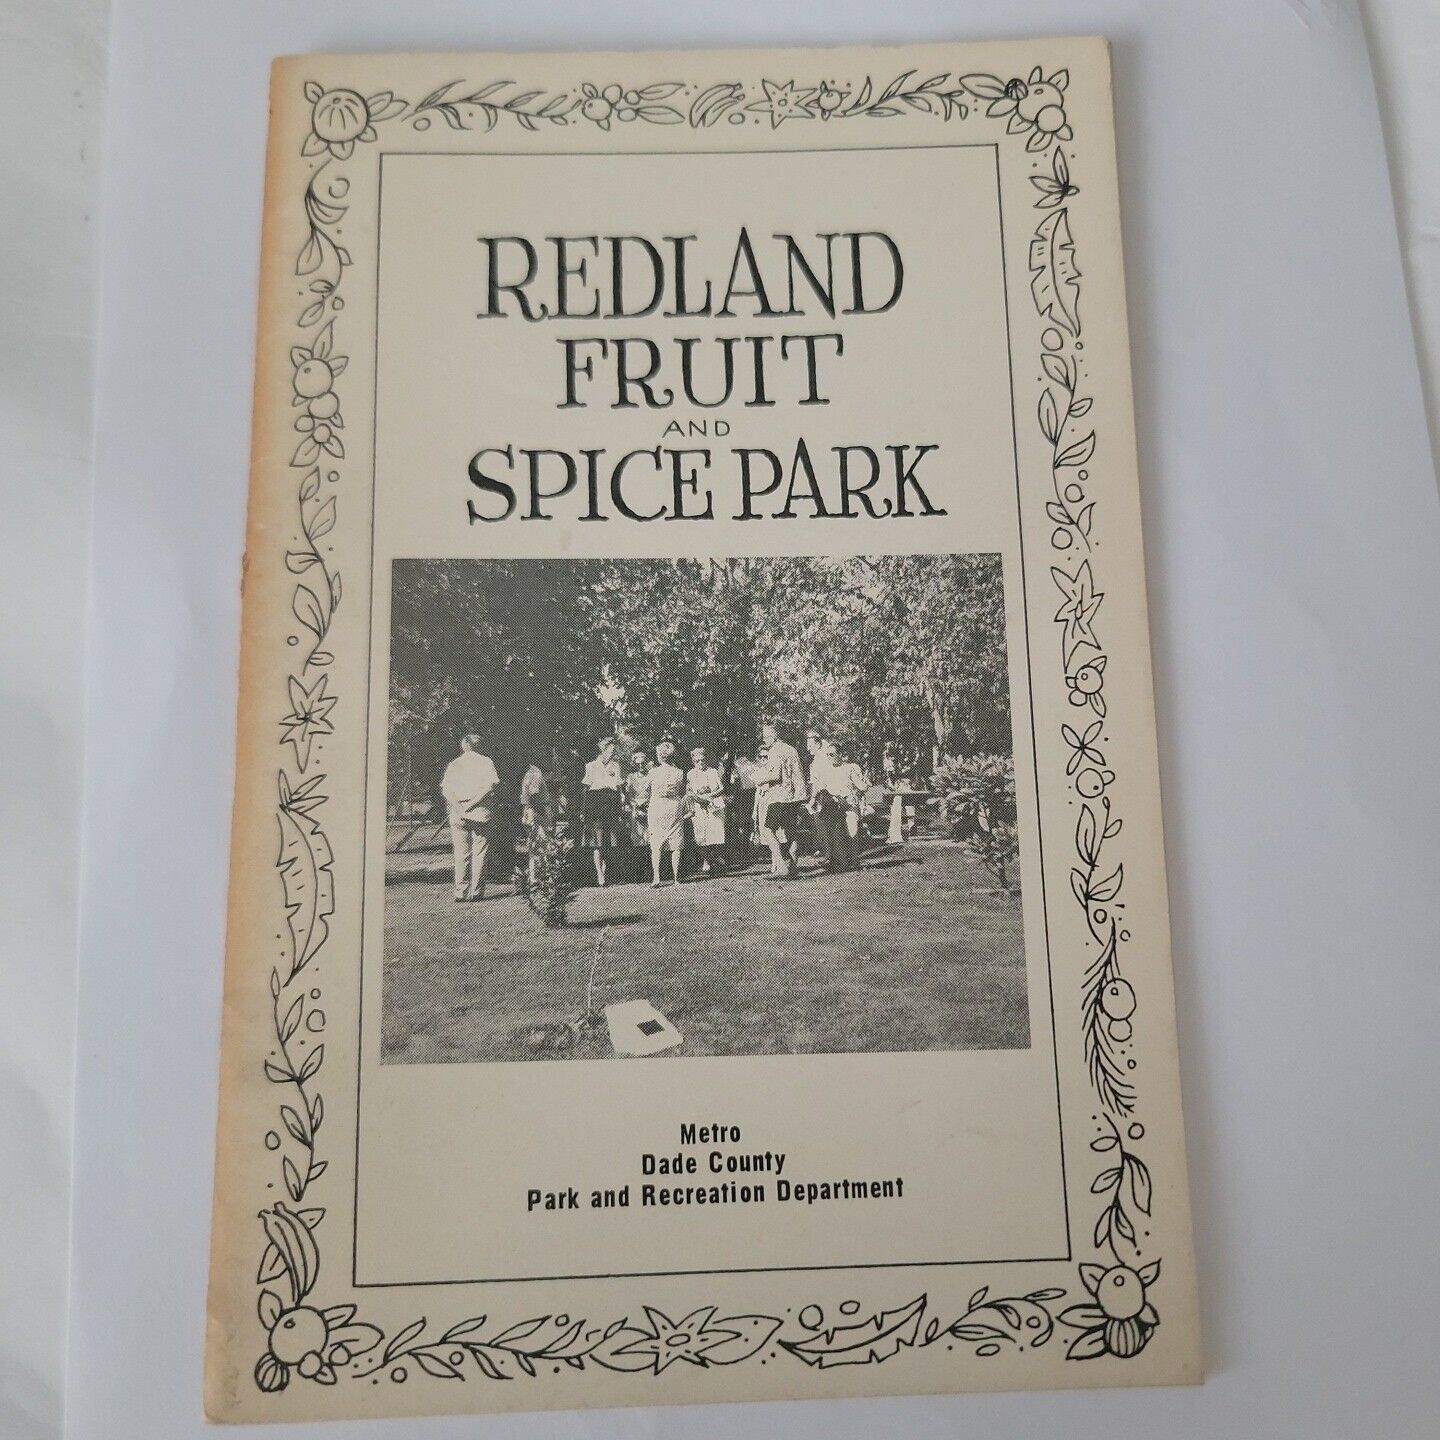 Redland Fruit and Spice Park Booklet Miami Florida Metro Dade County Brochure